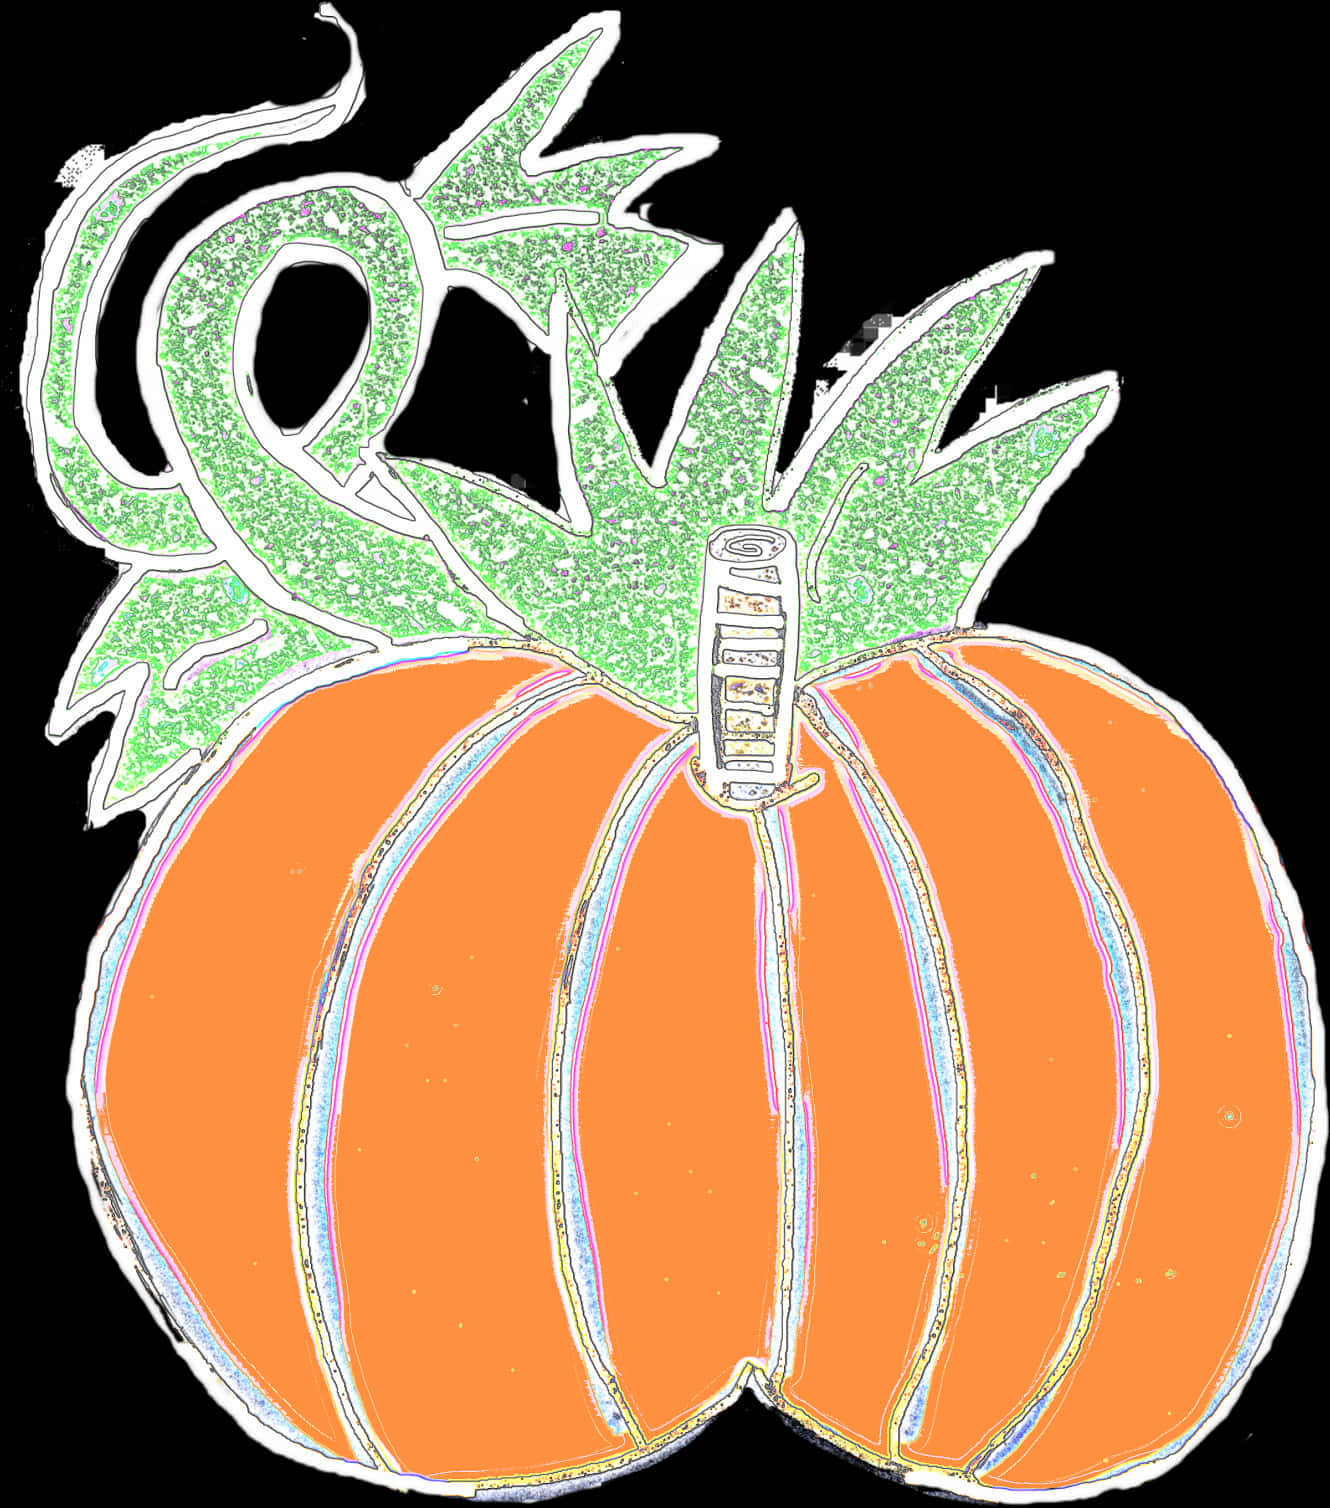 Stylized Pumpkin Illustration PNG image